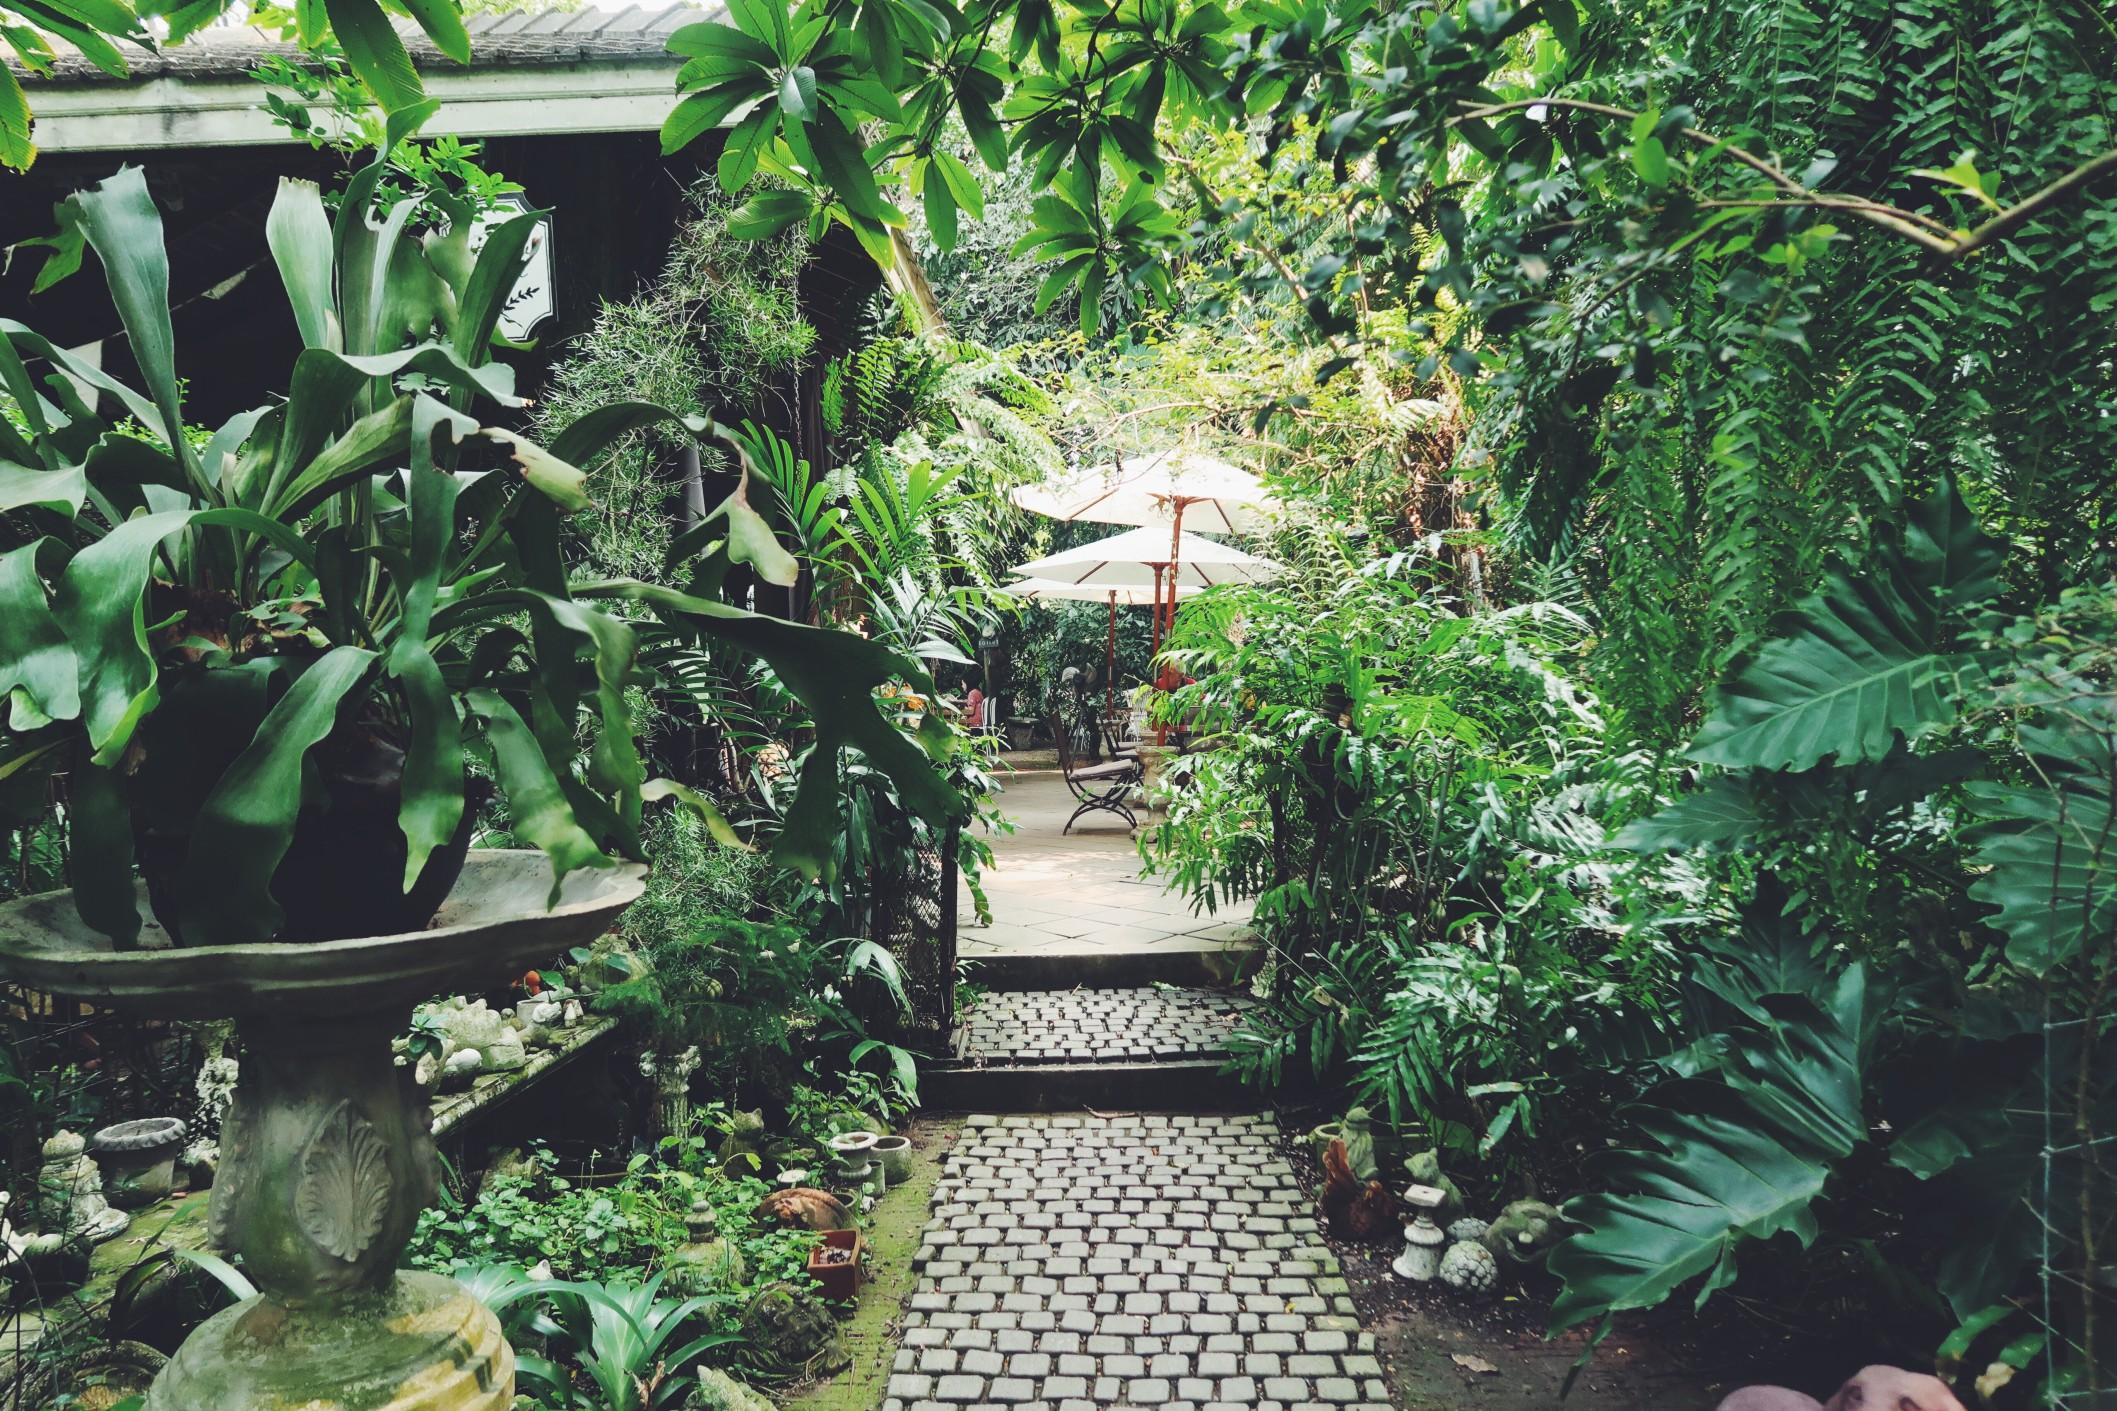 A green secret garden with a stone path